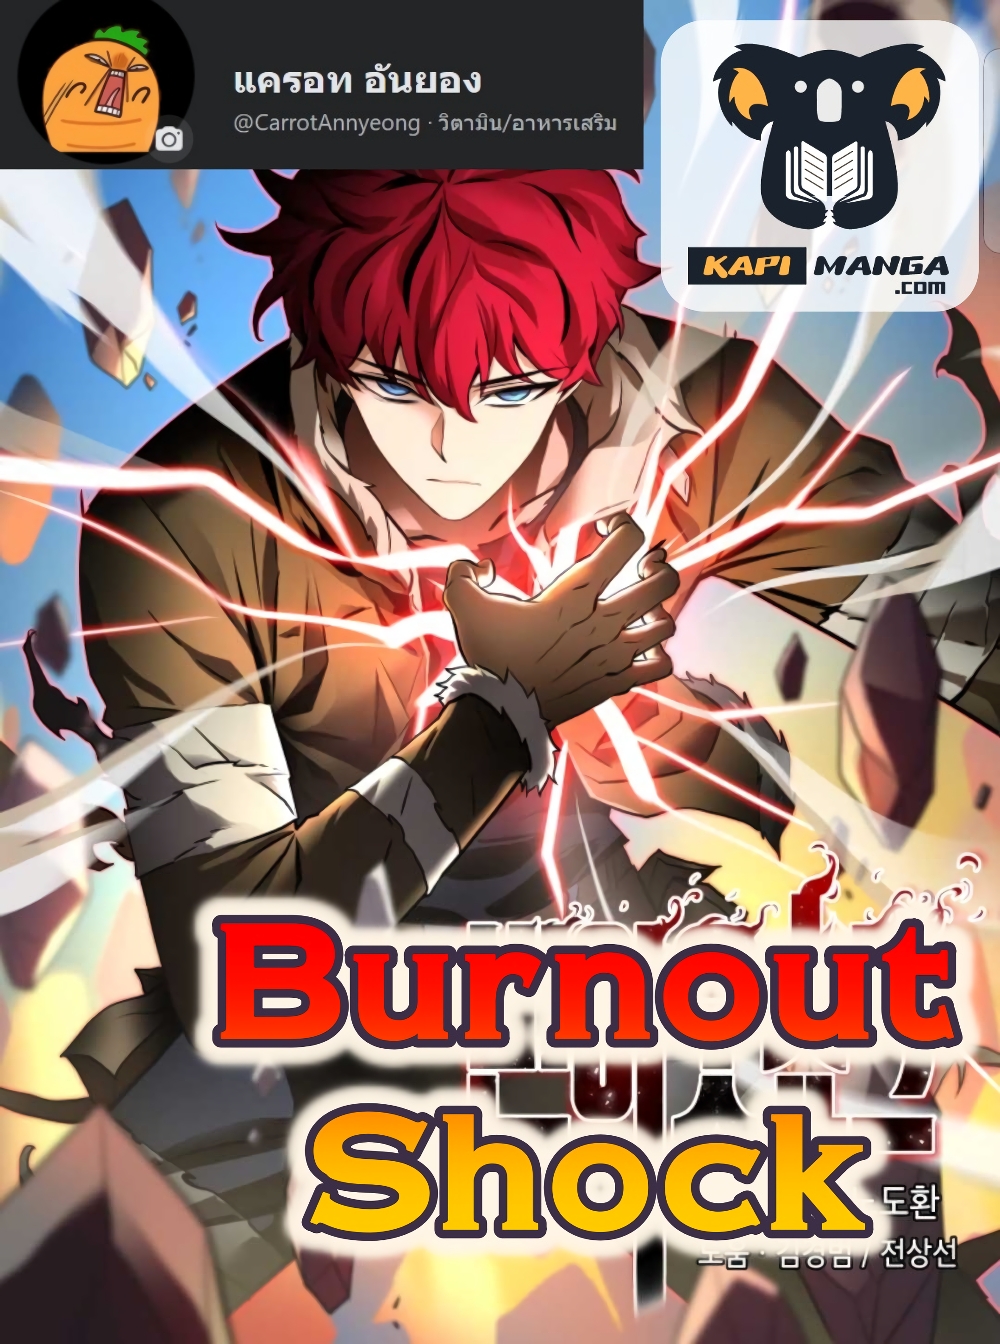 Burnout Shock31 (1)